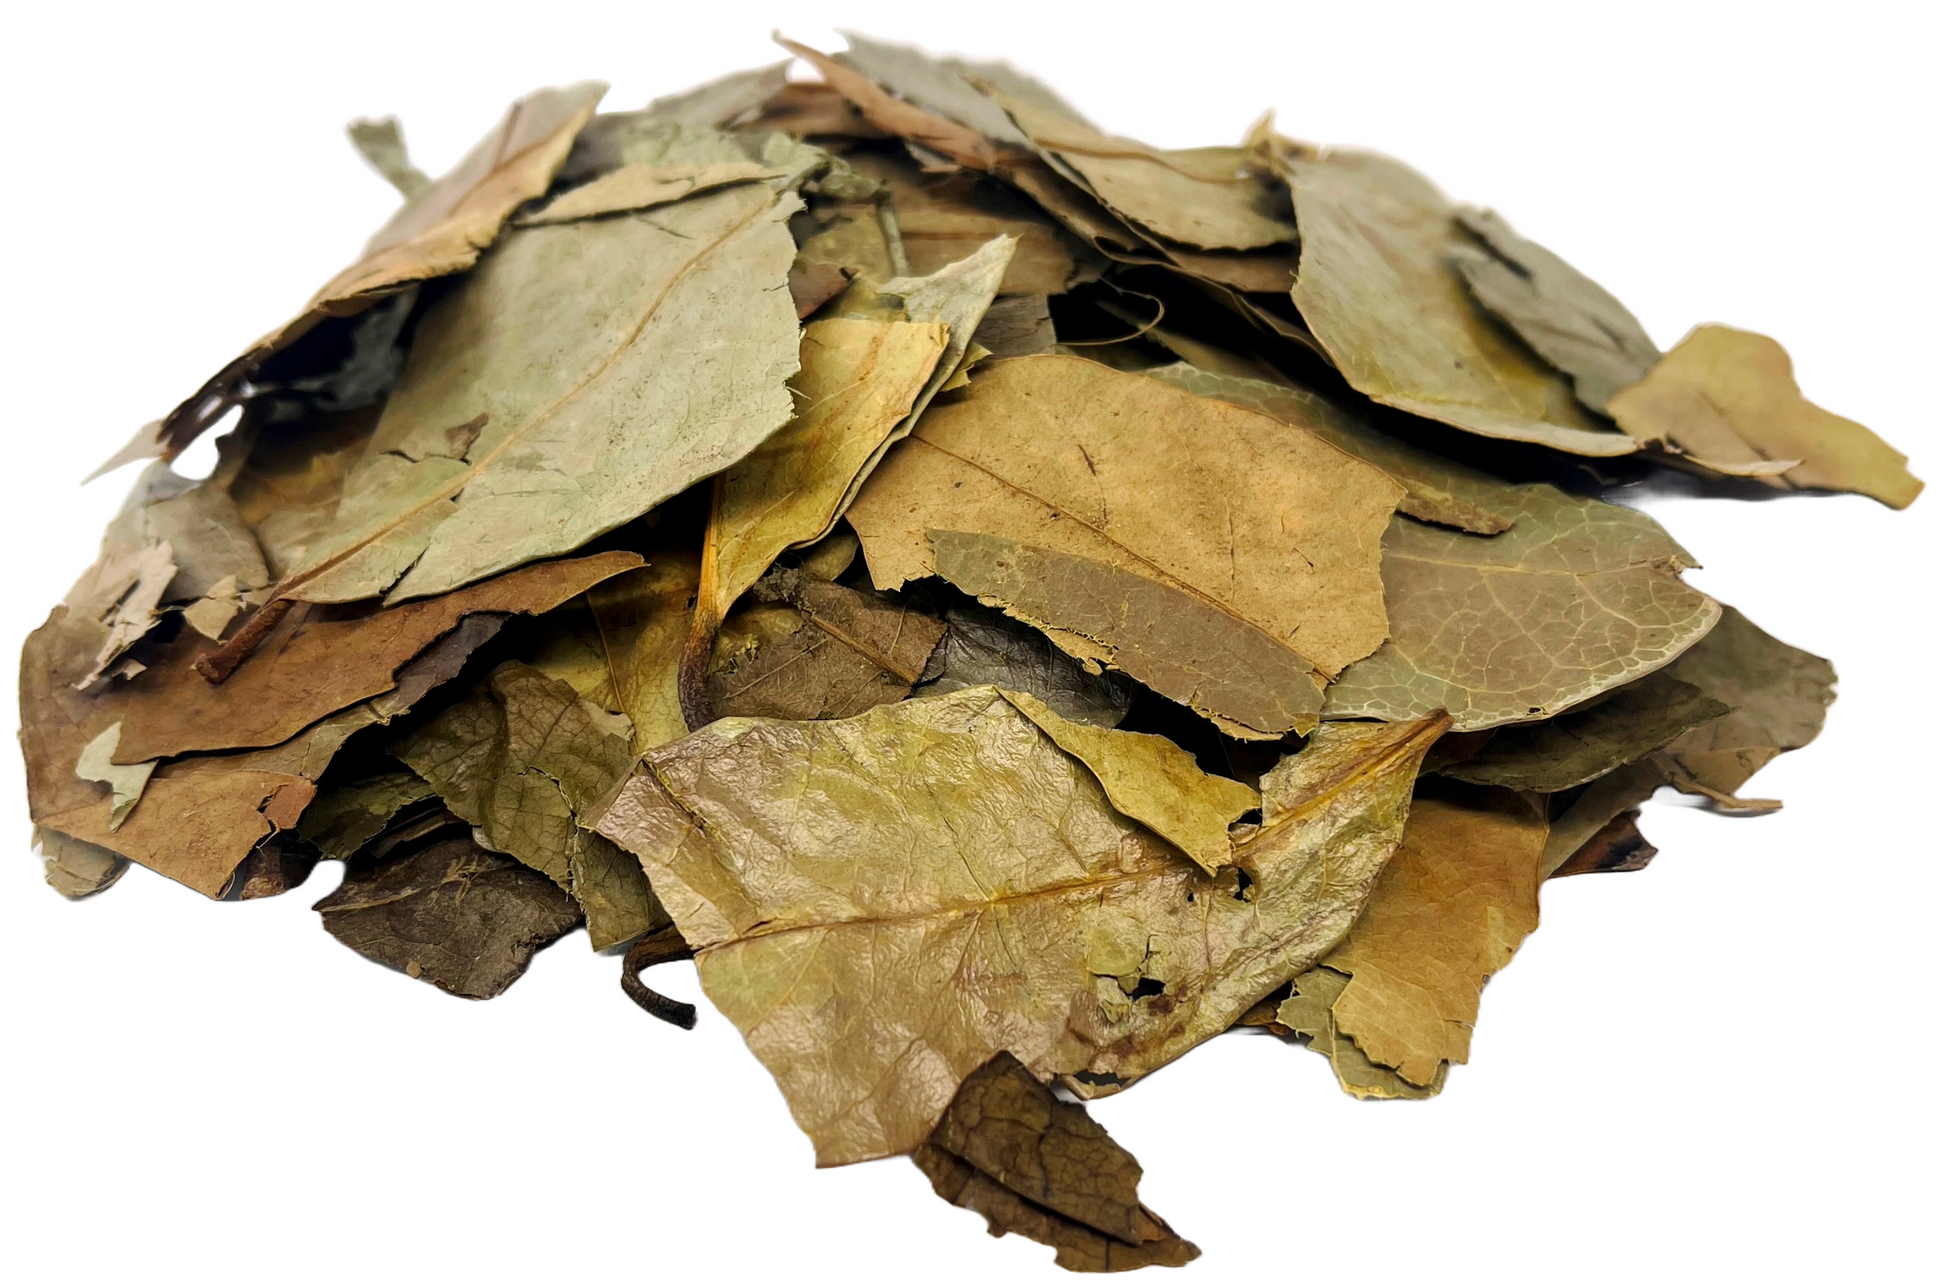 Soursop Tea Leaves Premium Hojas De Guanabana Herbal Infusion Tea (35g) Nuestra Salud